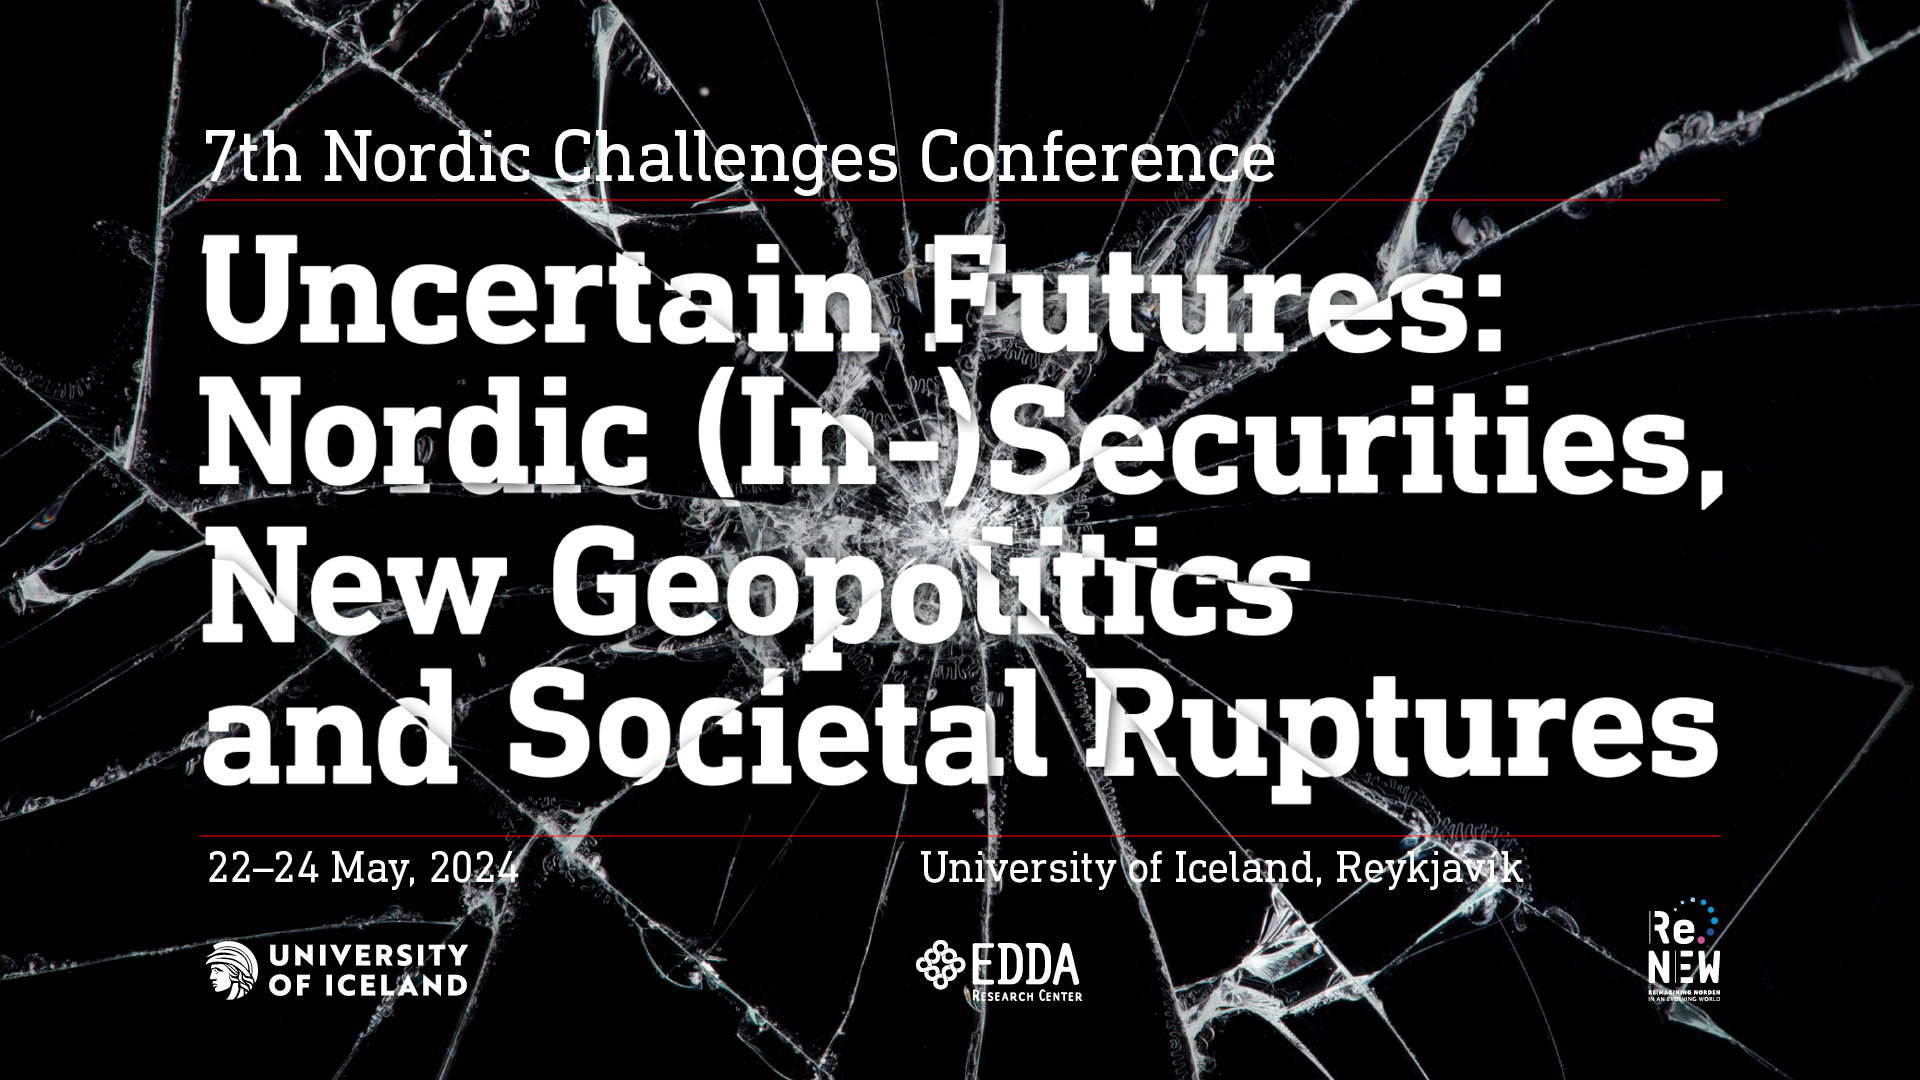 Programme: 7th Nordic Challenges Conference: Uncertain Futures: Nordic (In-)Securities, New Geopolitics, and Societal Ruptures